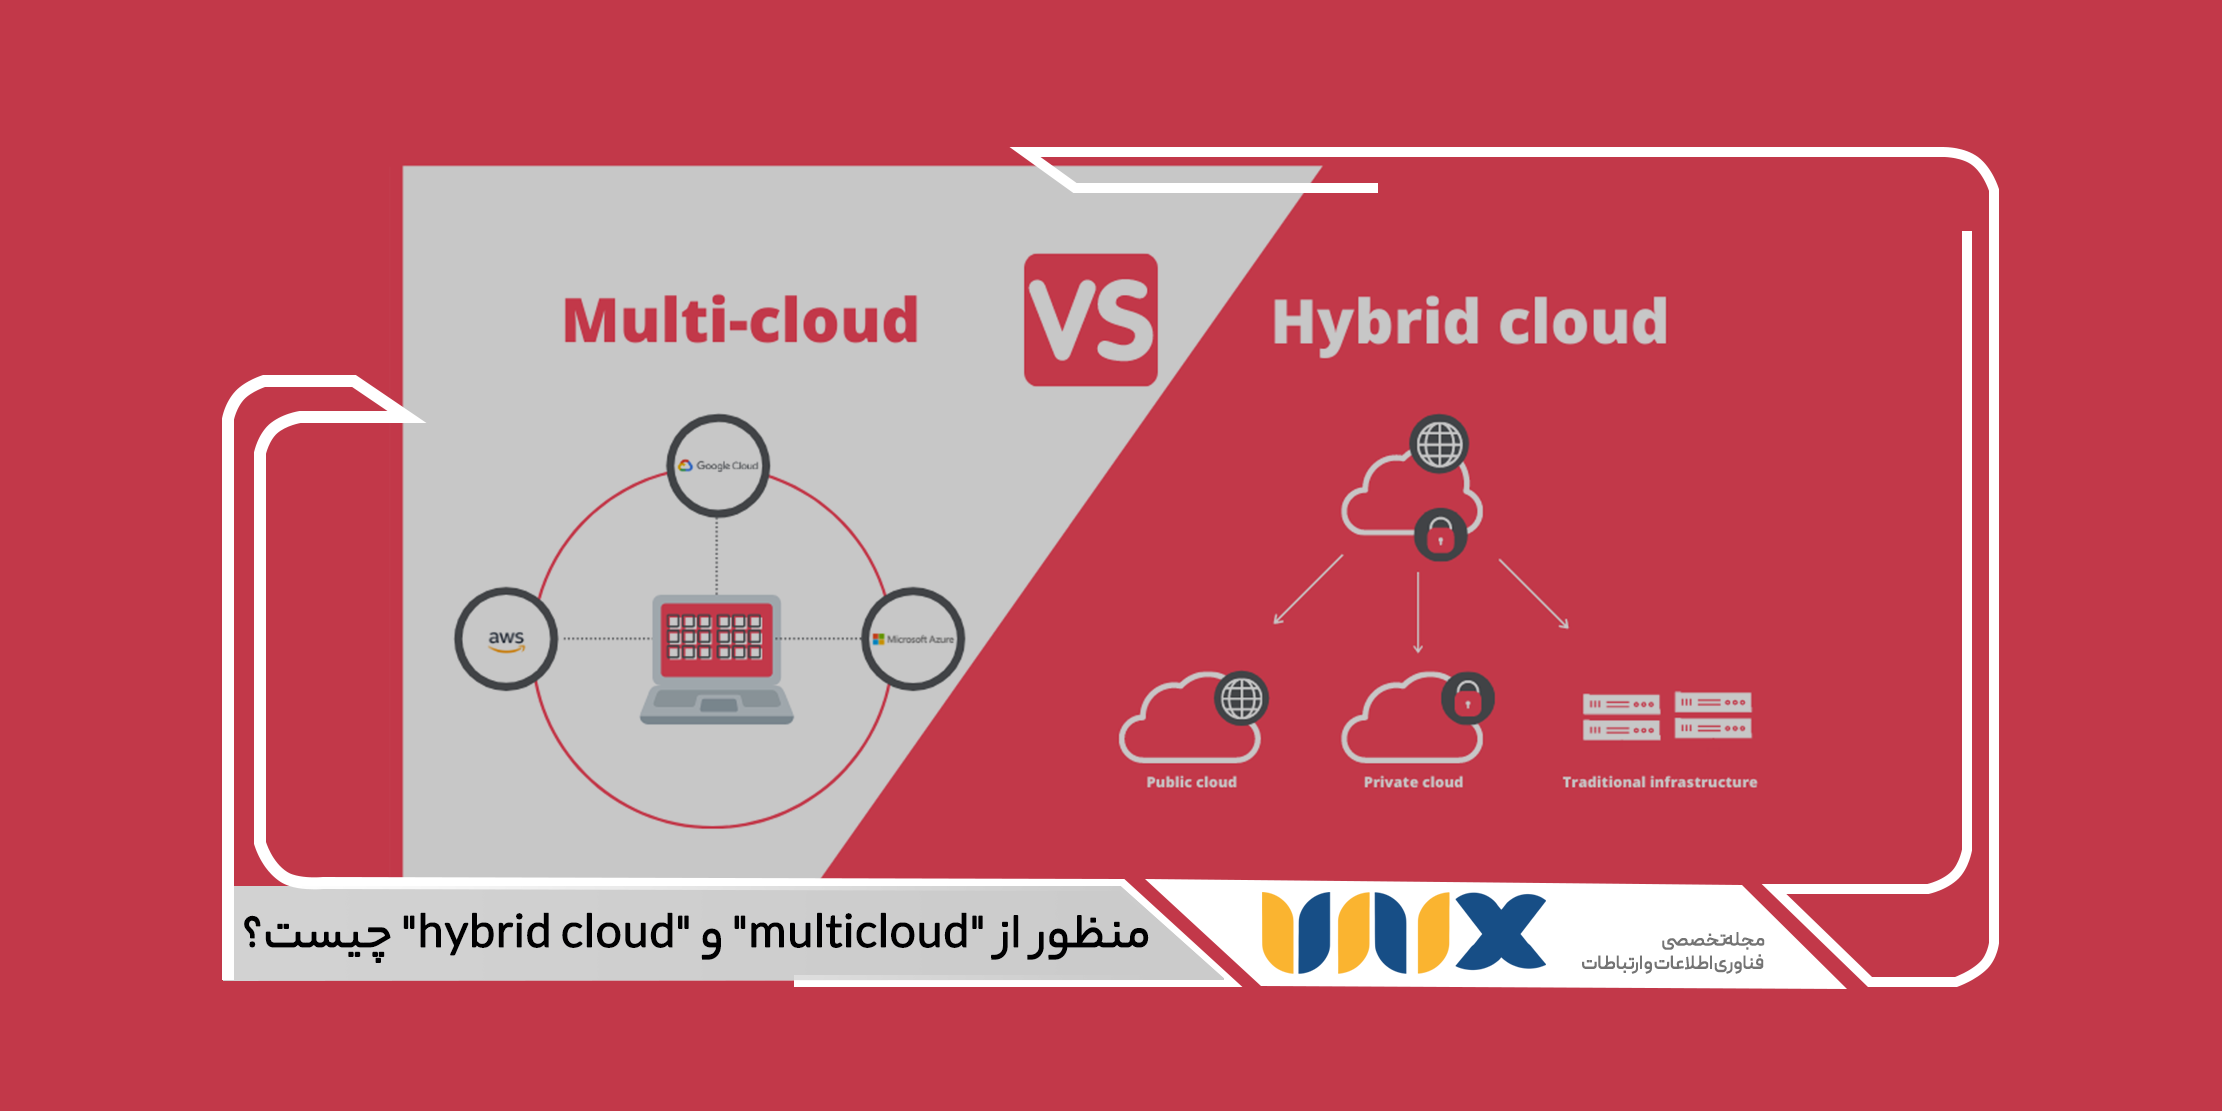 منظور از "multicloud" و "hybrid cloud"